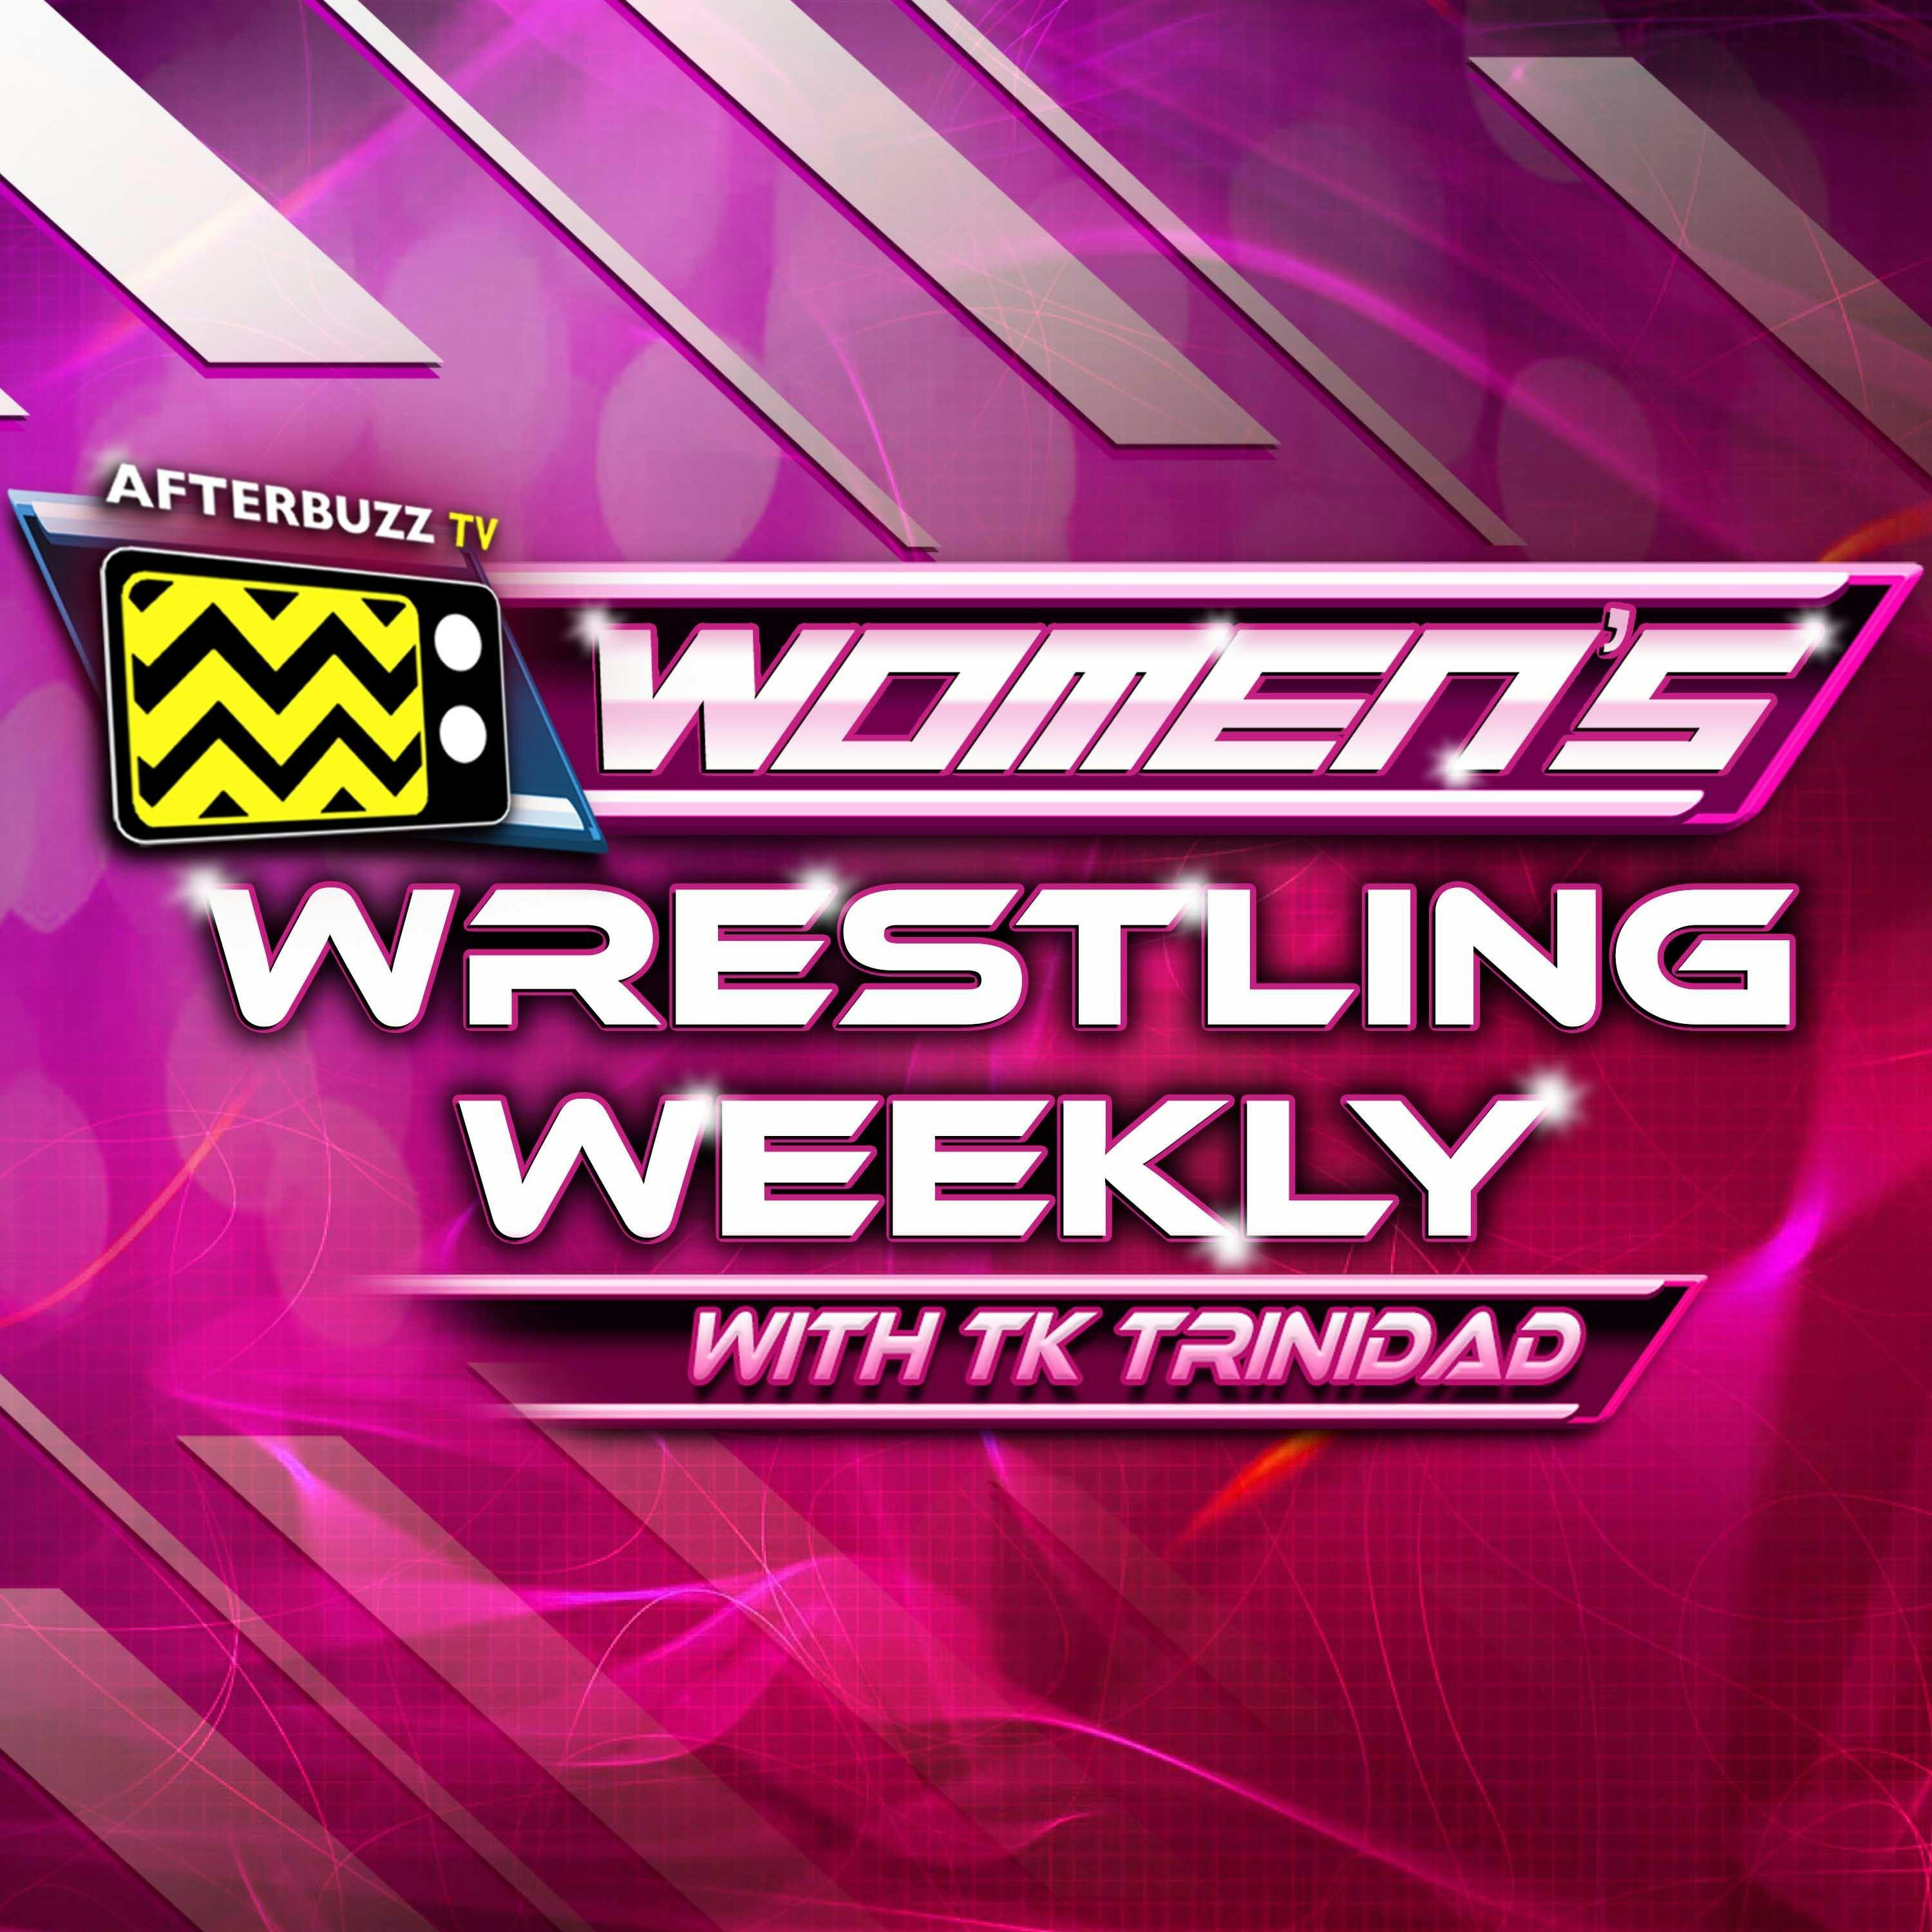 Women’s Wrestling Weekly with TK Trinidad